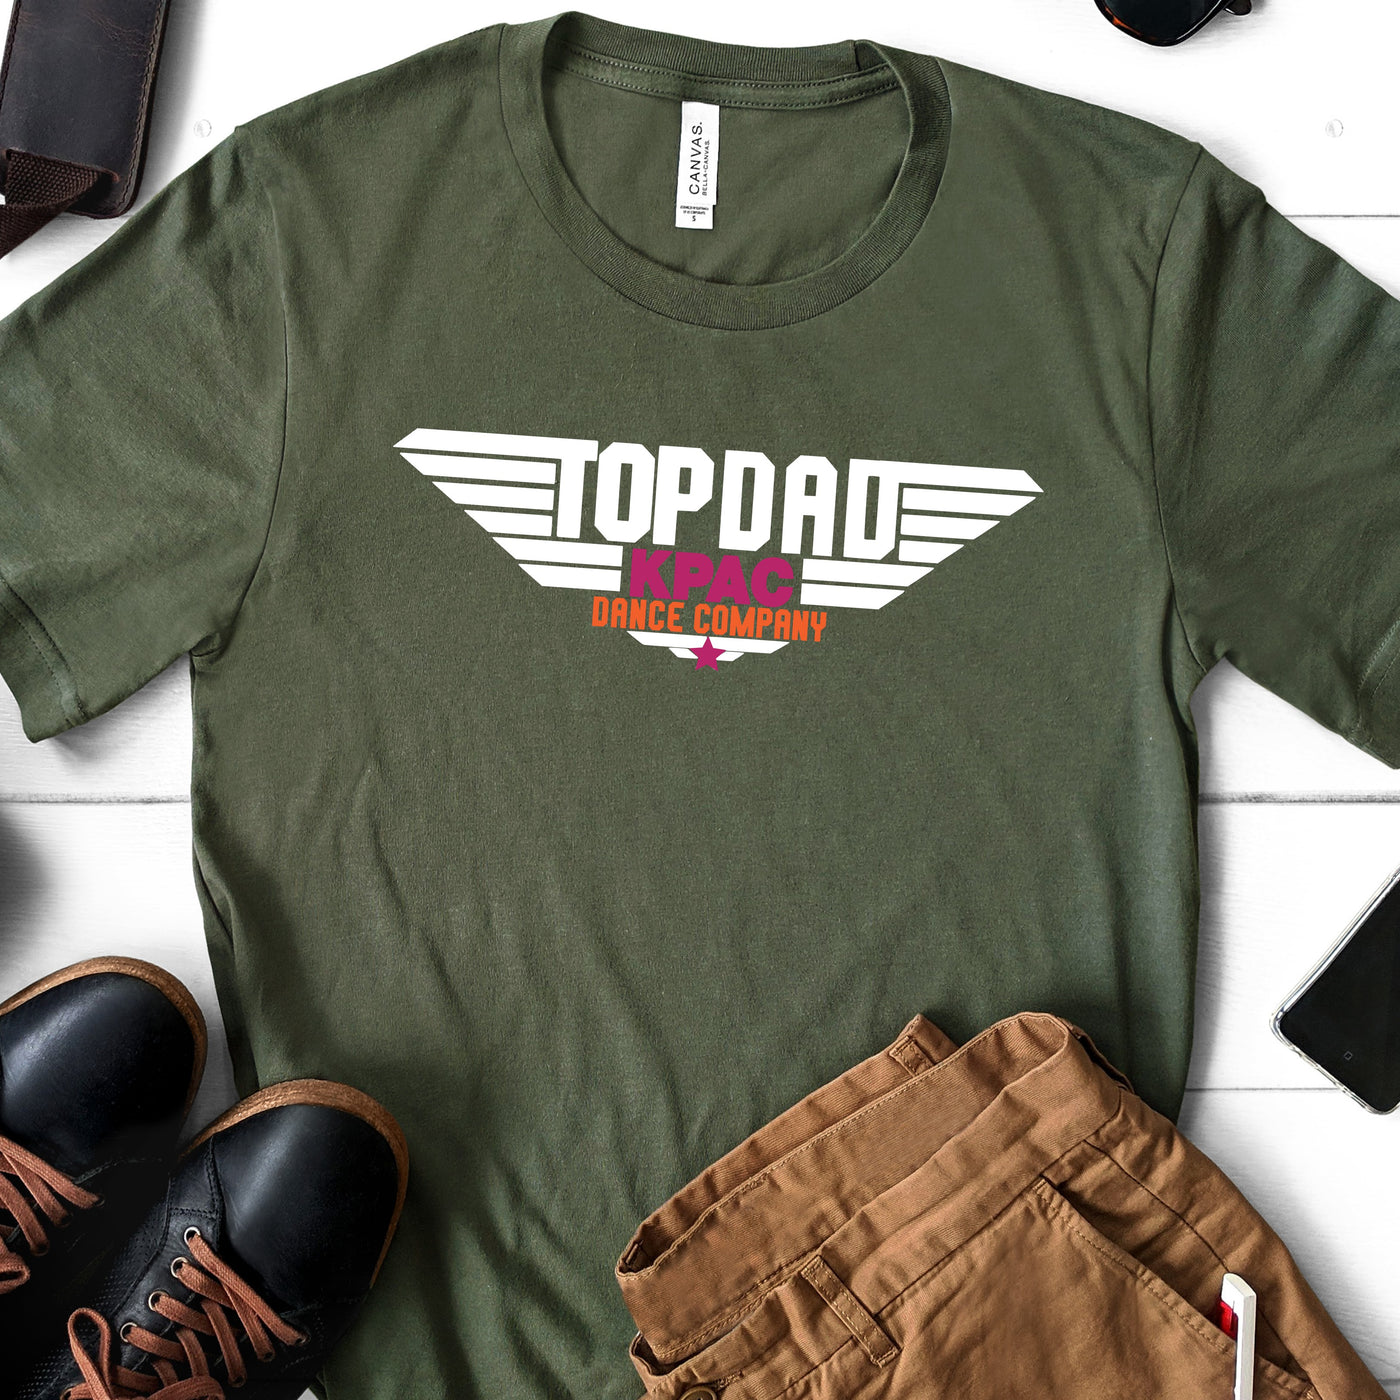 Top Gun Themed KPAC youth & adult t-shirts